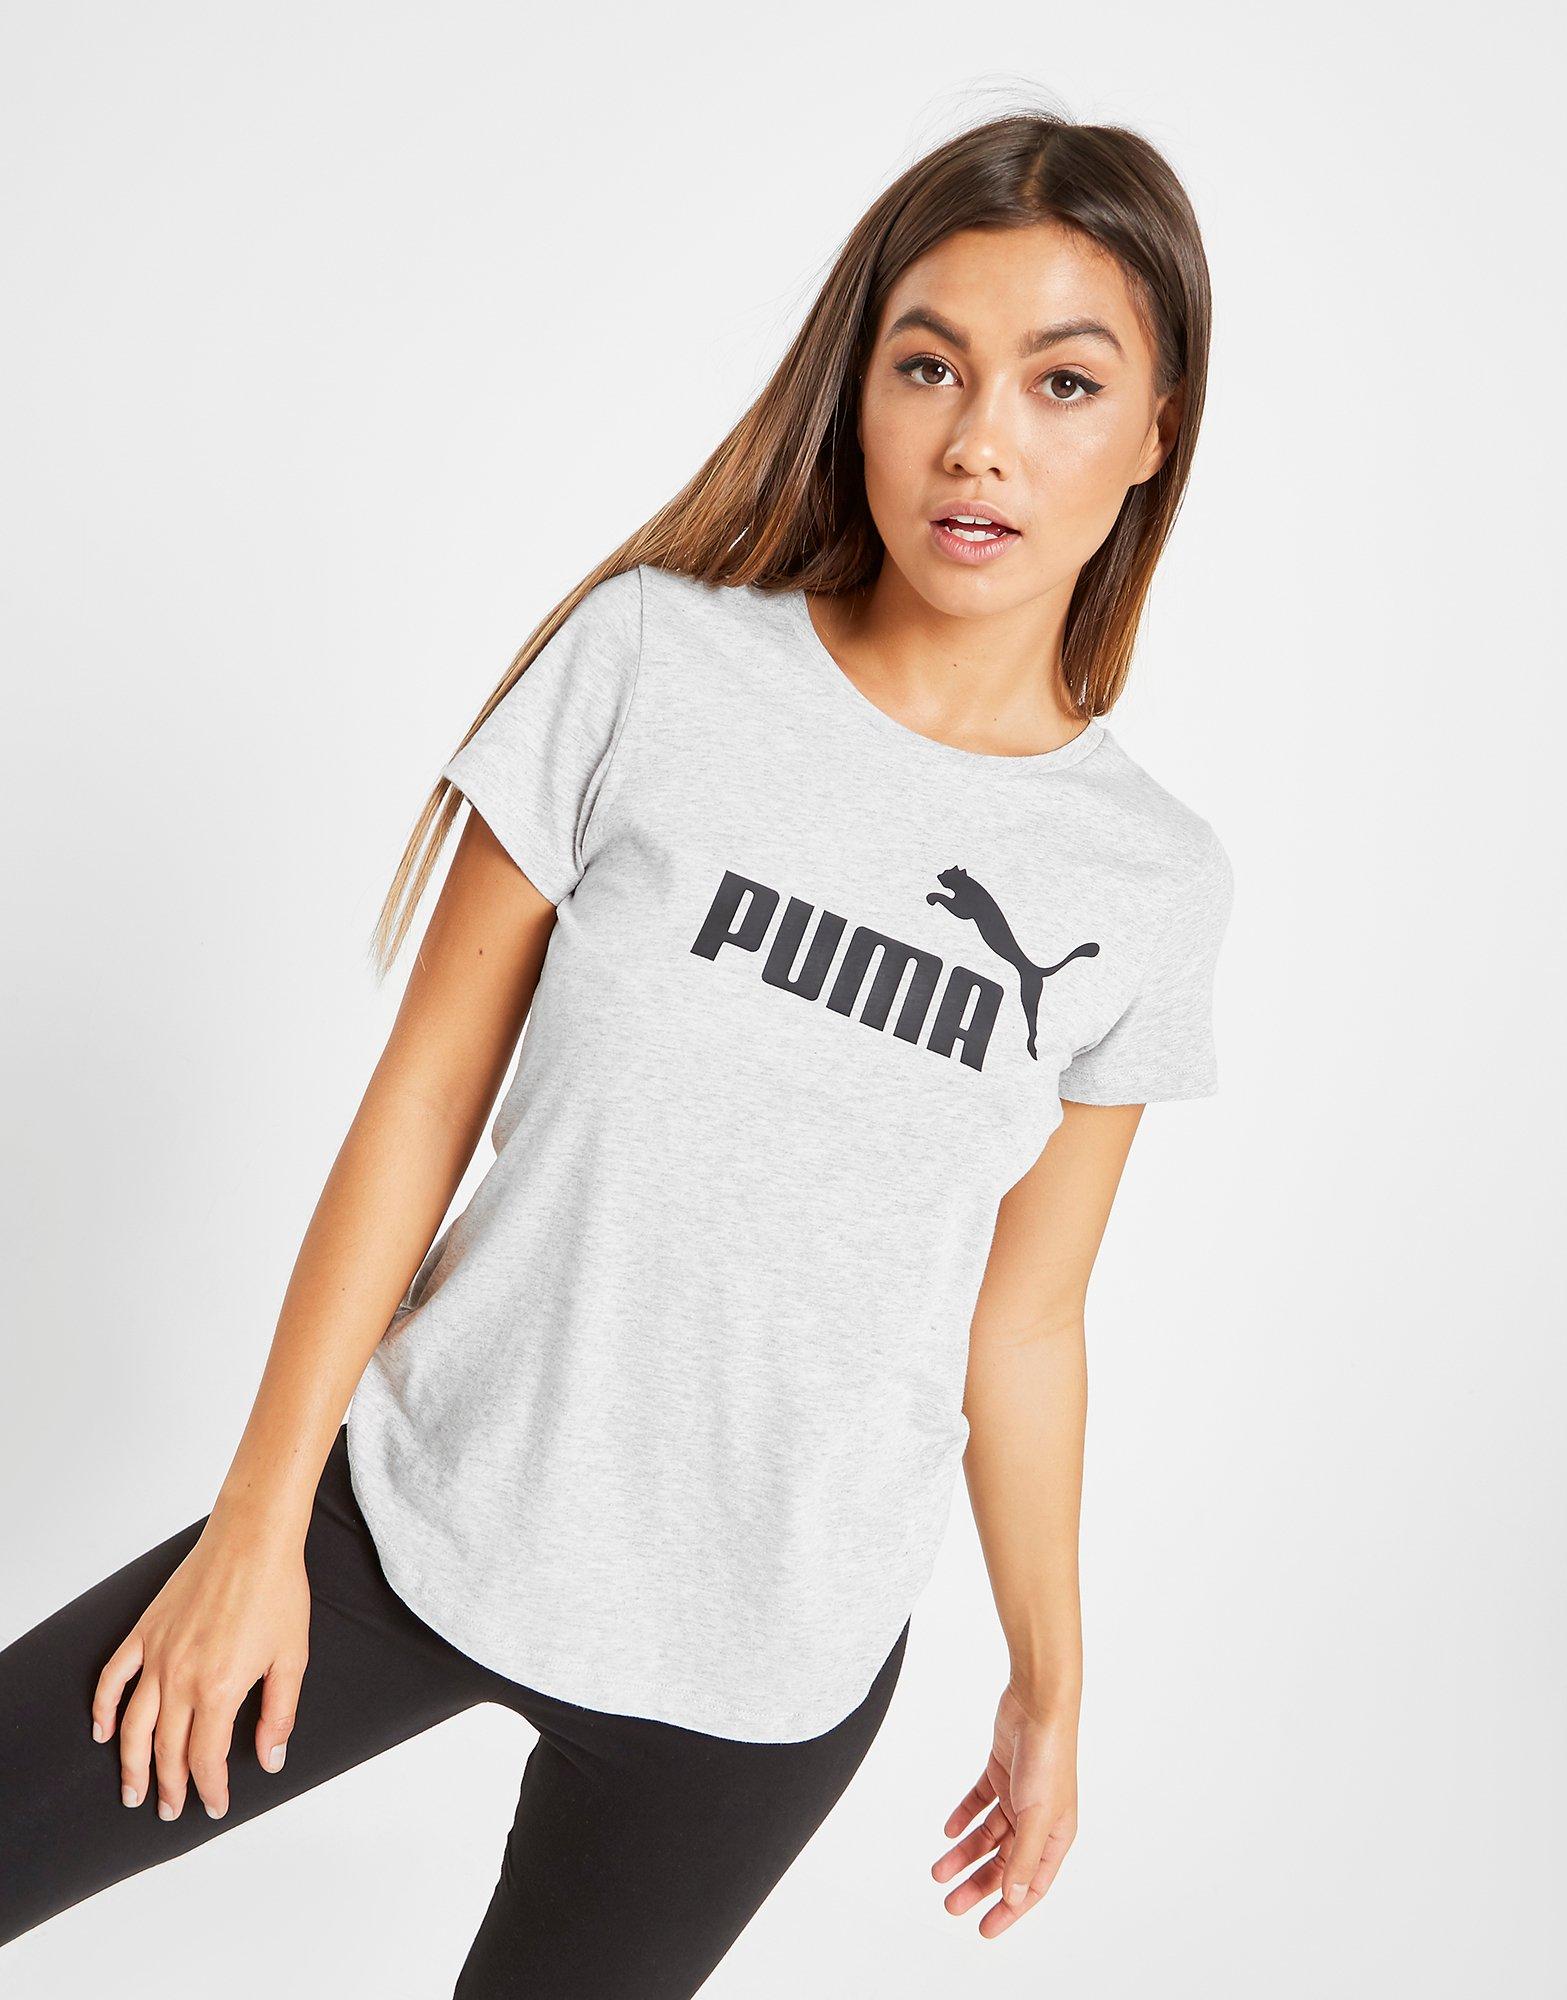 Shop den PUMA Core T-Shirt Damen in Grey